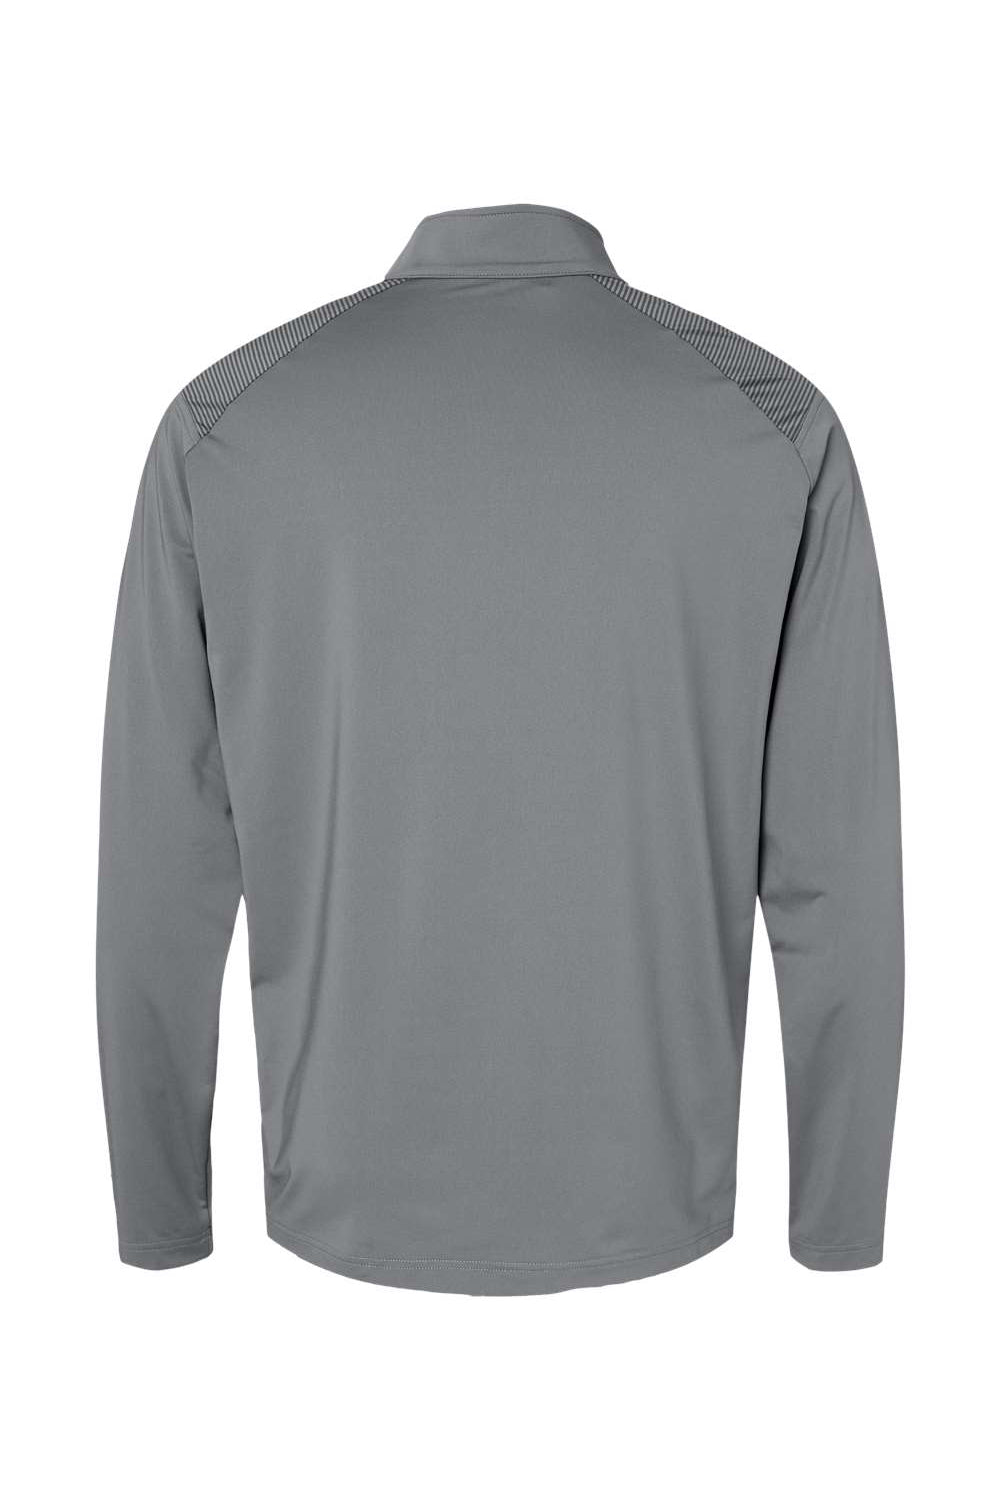 Adidas A520 Mens Shoulder Stripe Moisture Wicking 1/4 Zip Sweatshirt Grey Flat Back